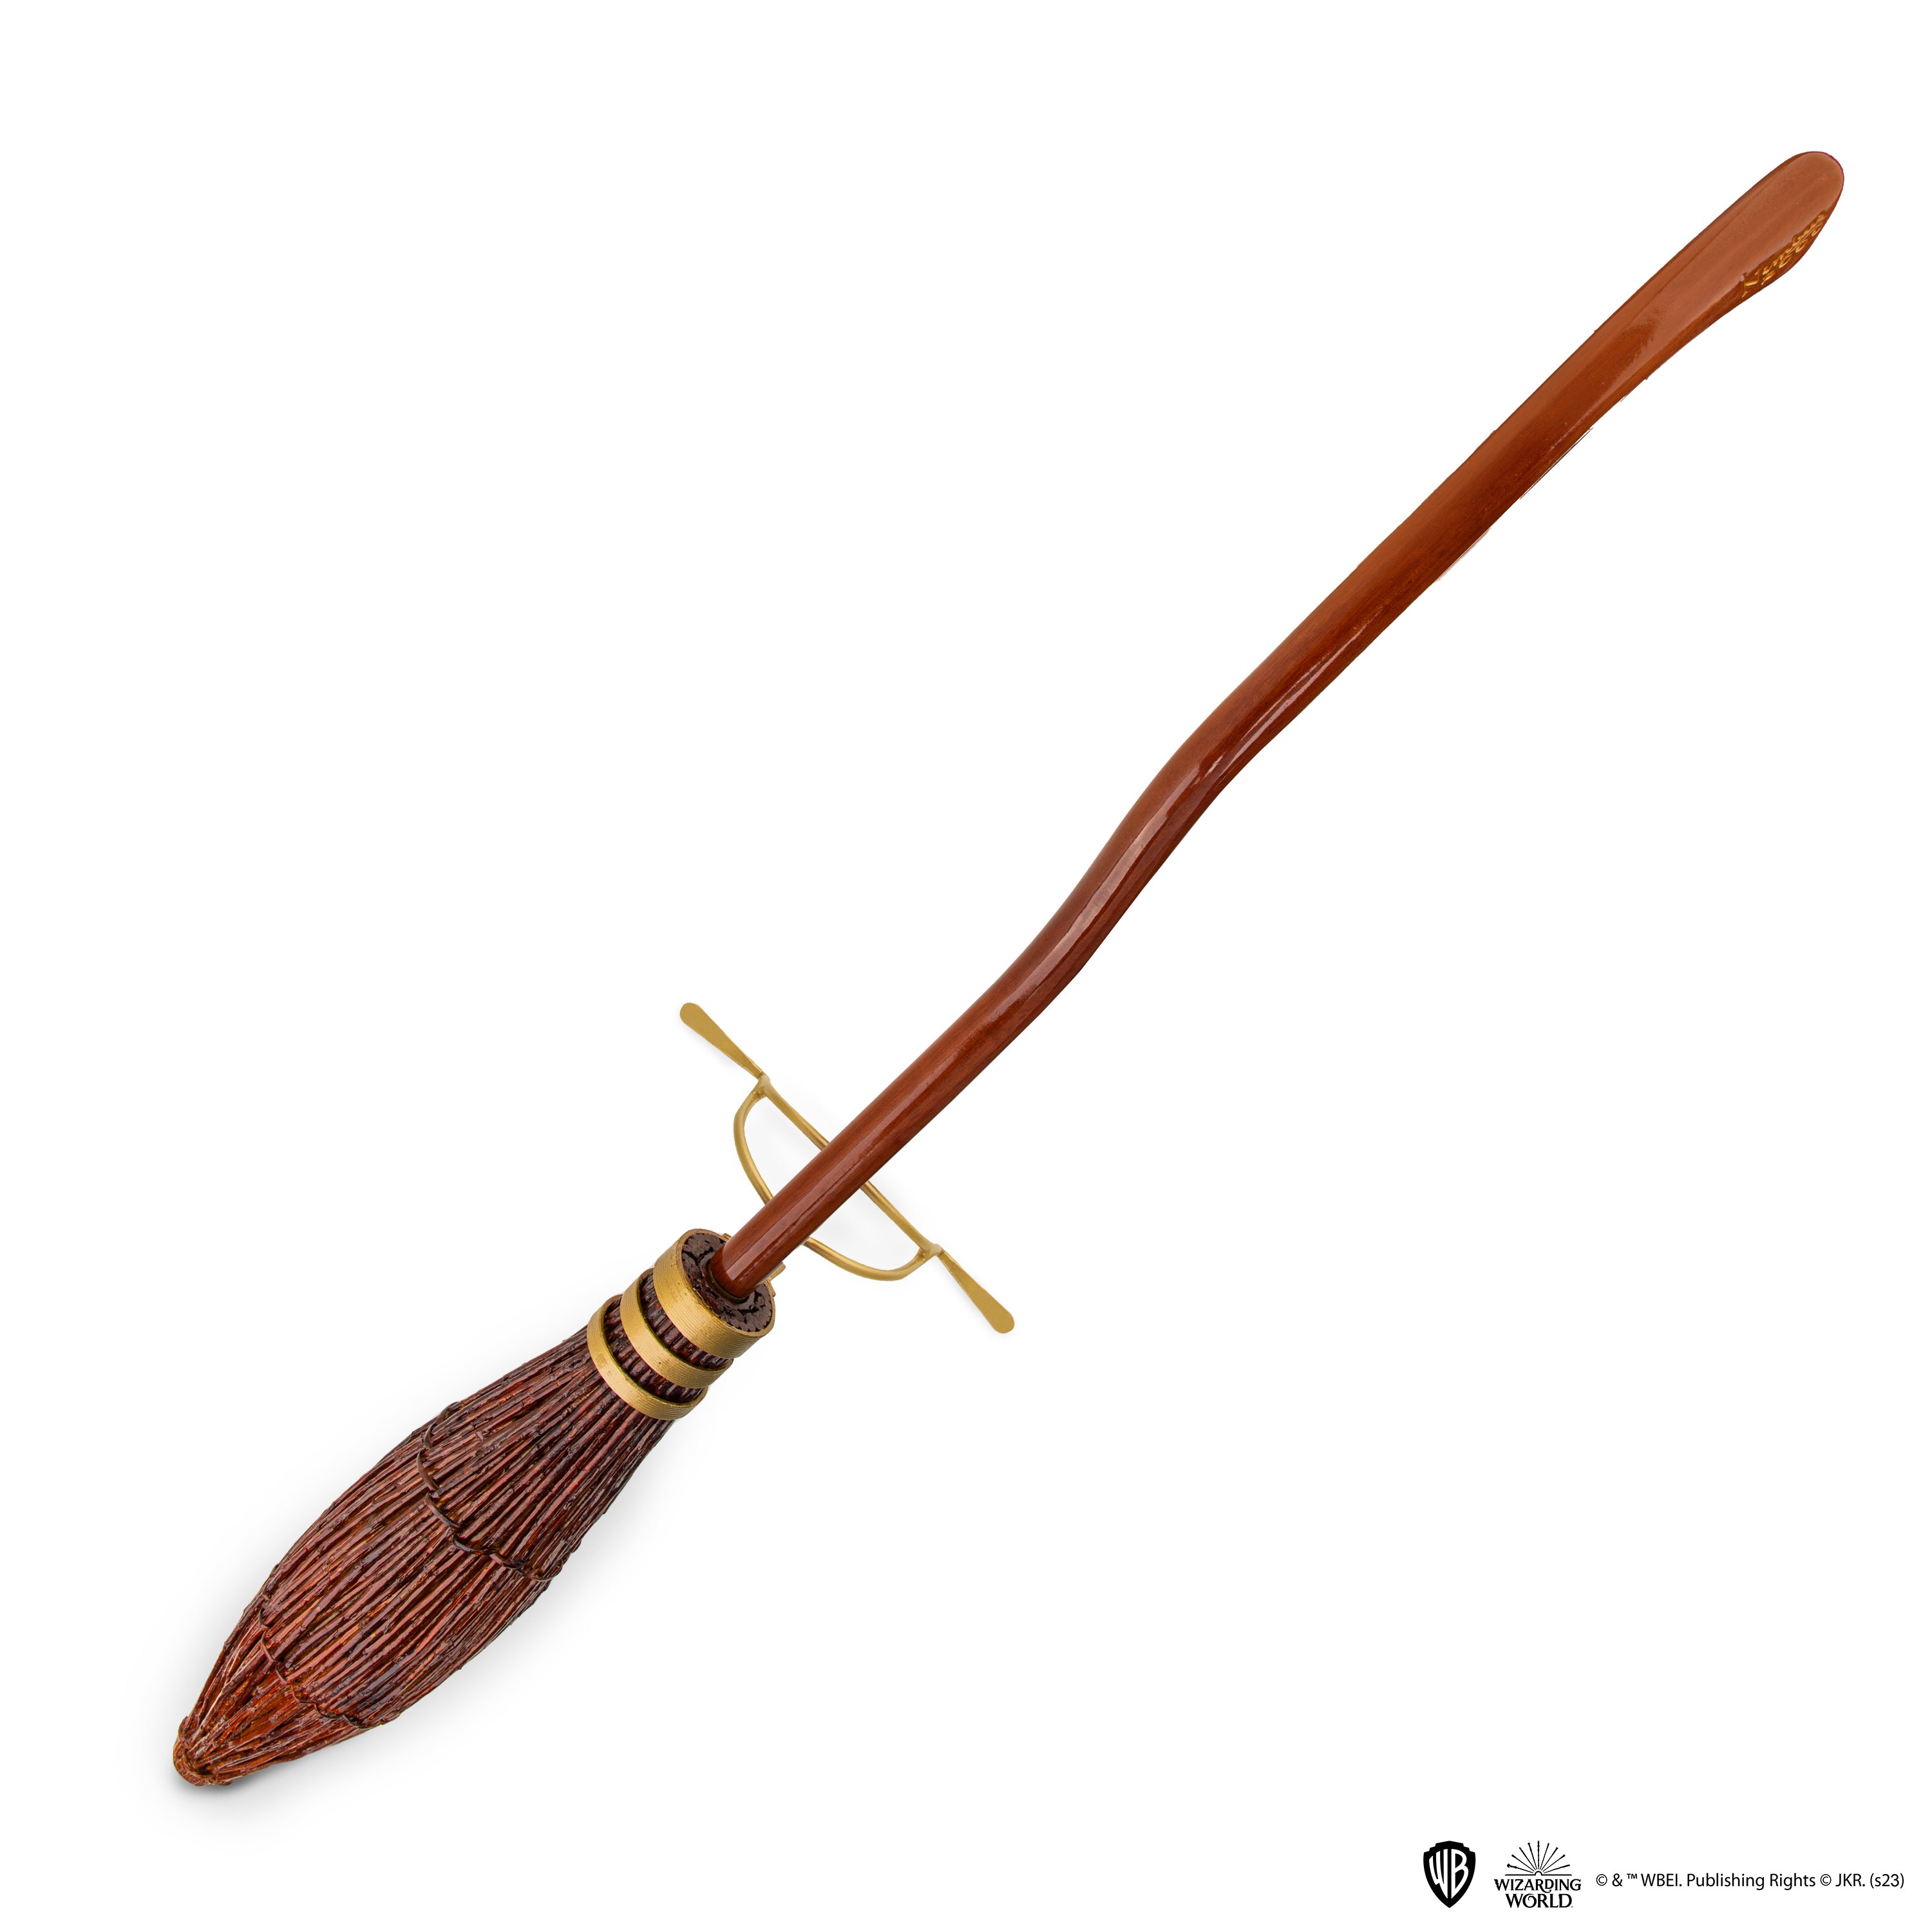 An amazing 1:2 scale broom : Cinereplicas' Nimbus 2000 Junior